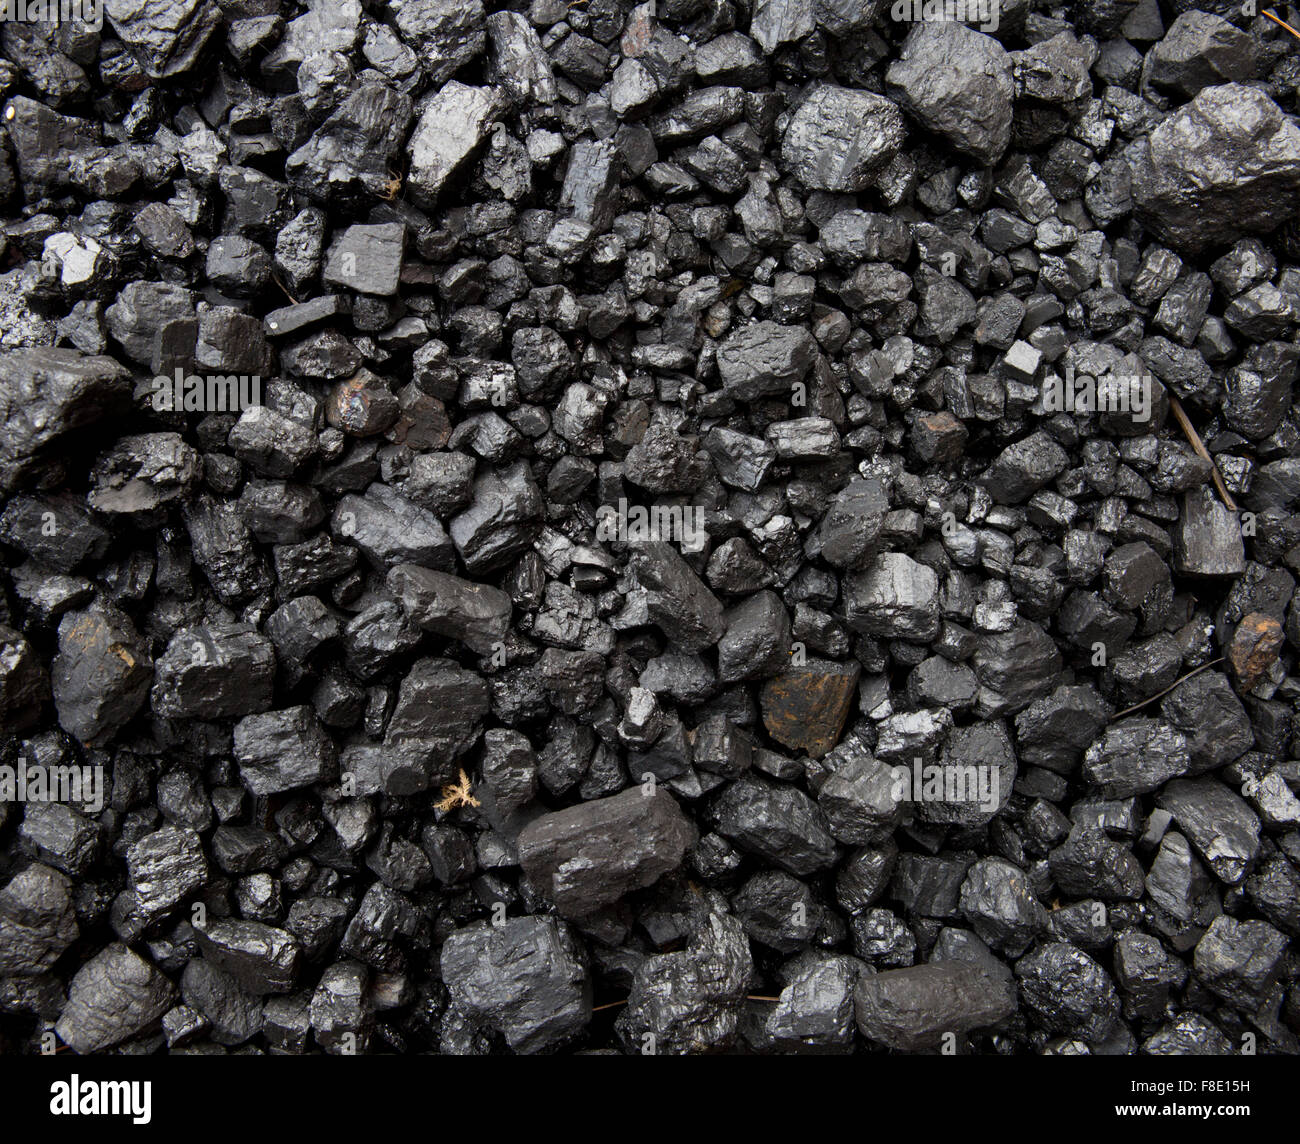 Pieces of coal. Stock Photo